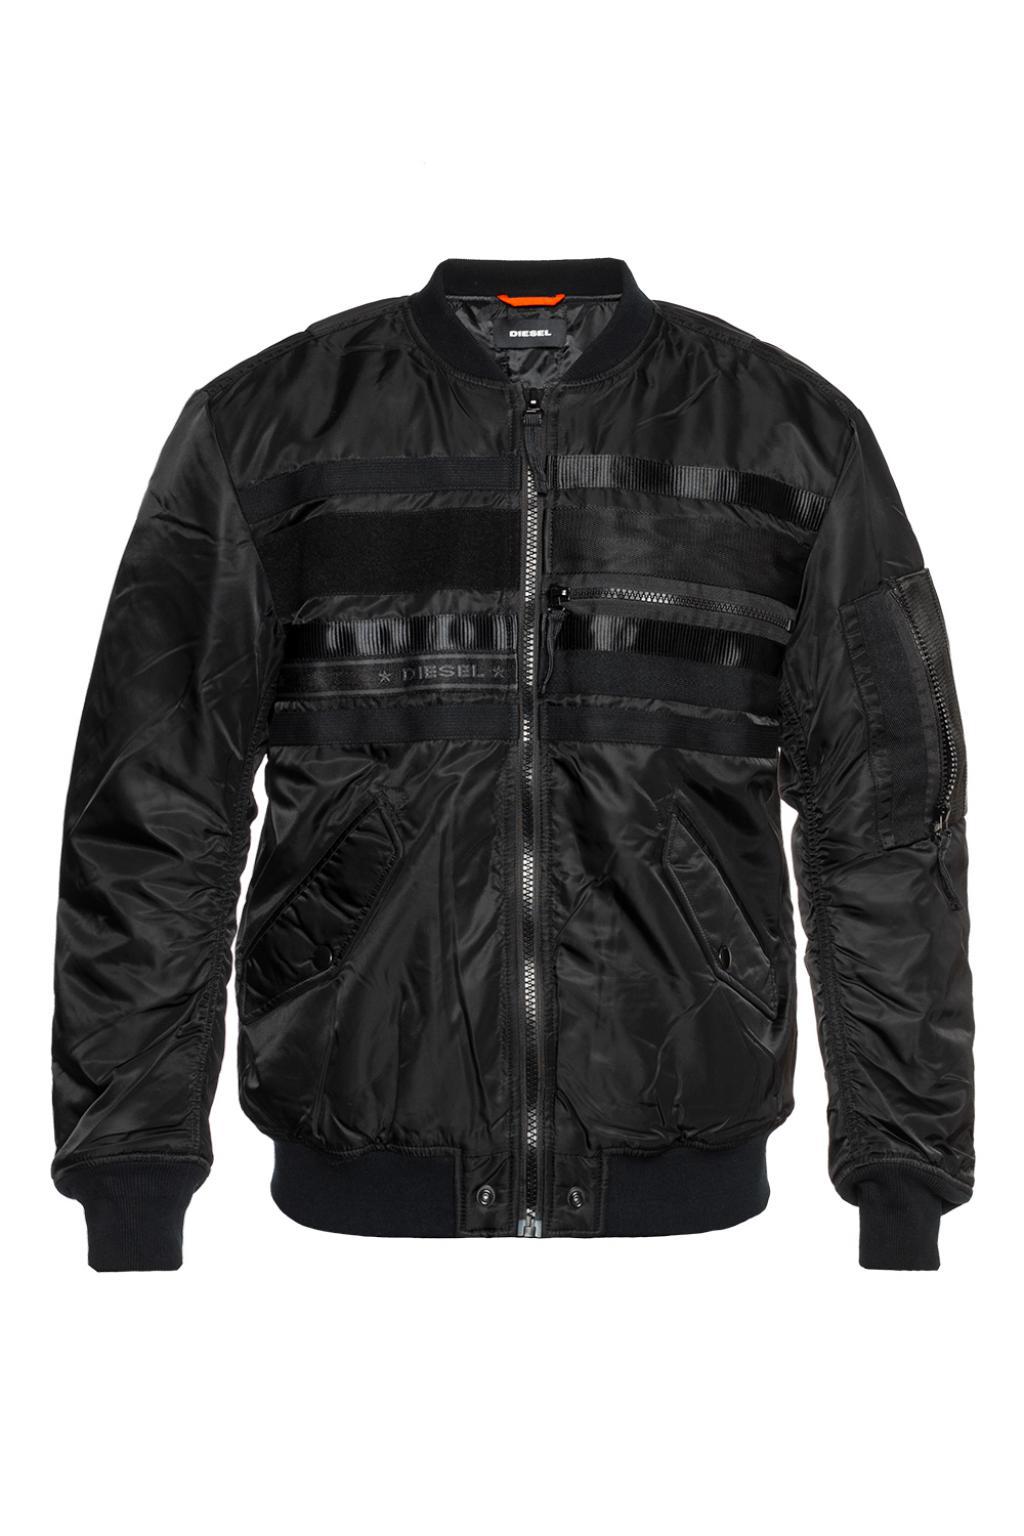 DIESEL Synthetic Bomber Jacket in Black for Men - Lyst